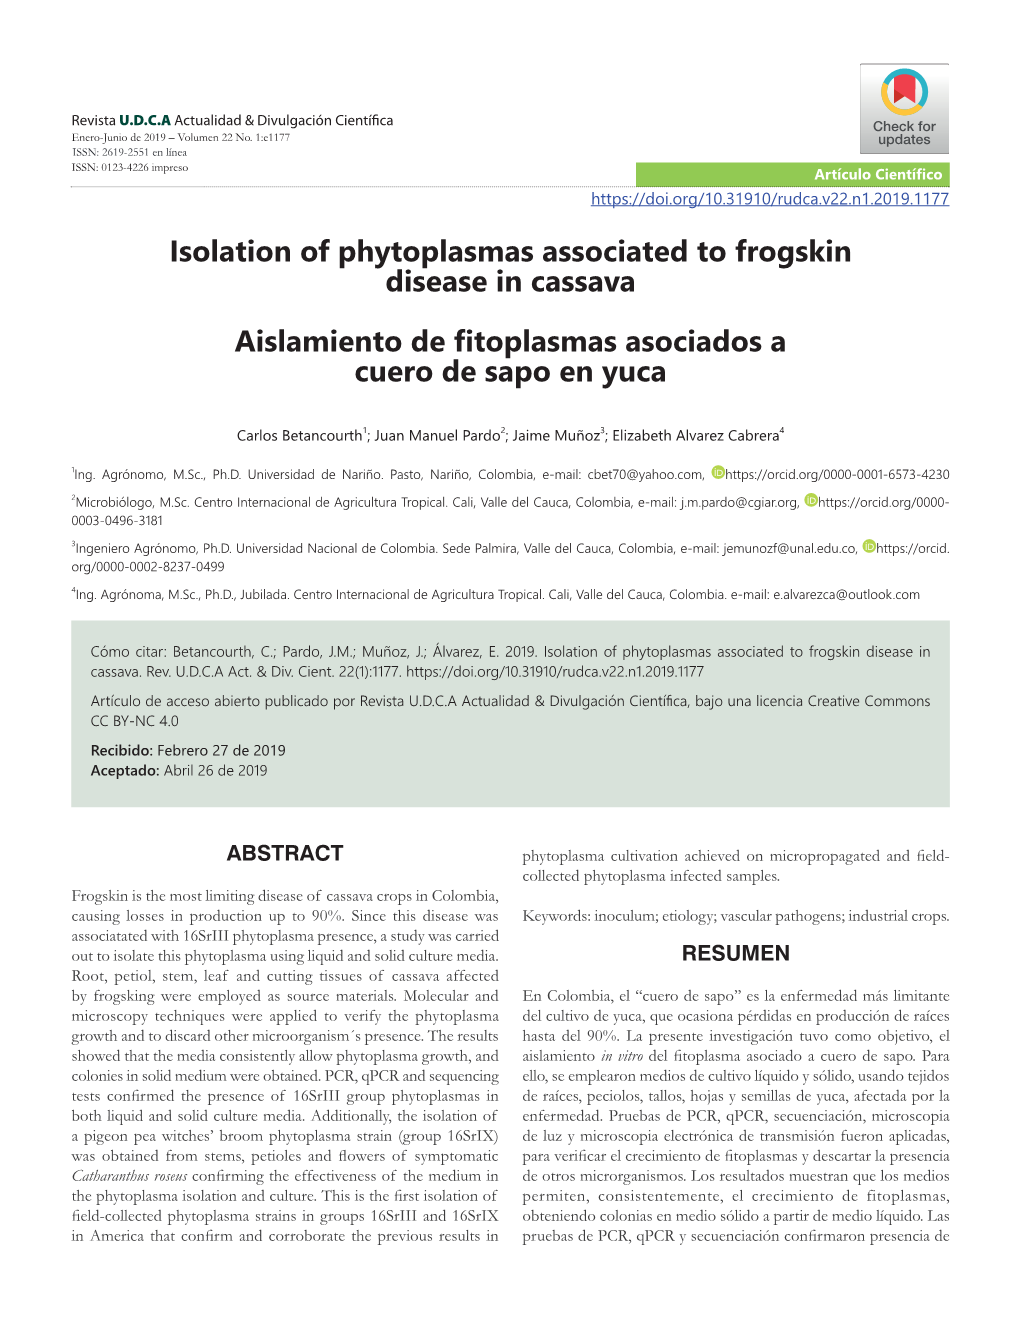 Isolation of Phytoplasmas Associated to Frogskin Disease in Cassava Aislamiento De ﬁ Toplasmas Asociados a Cuero De Sapo En Yuca